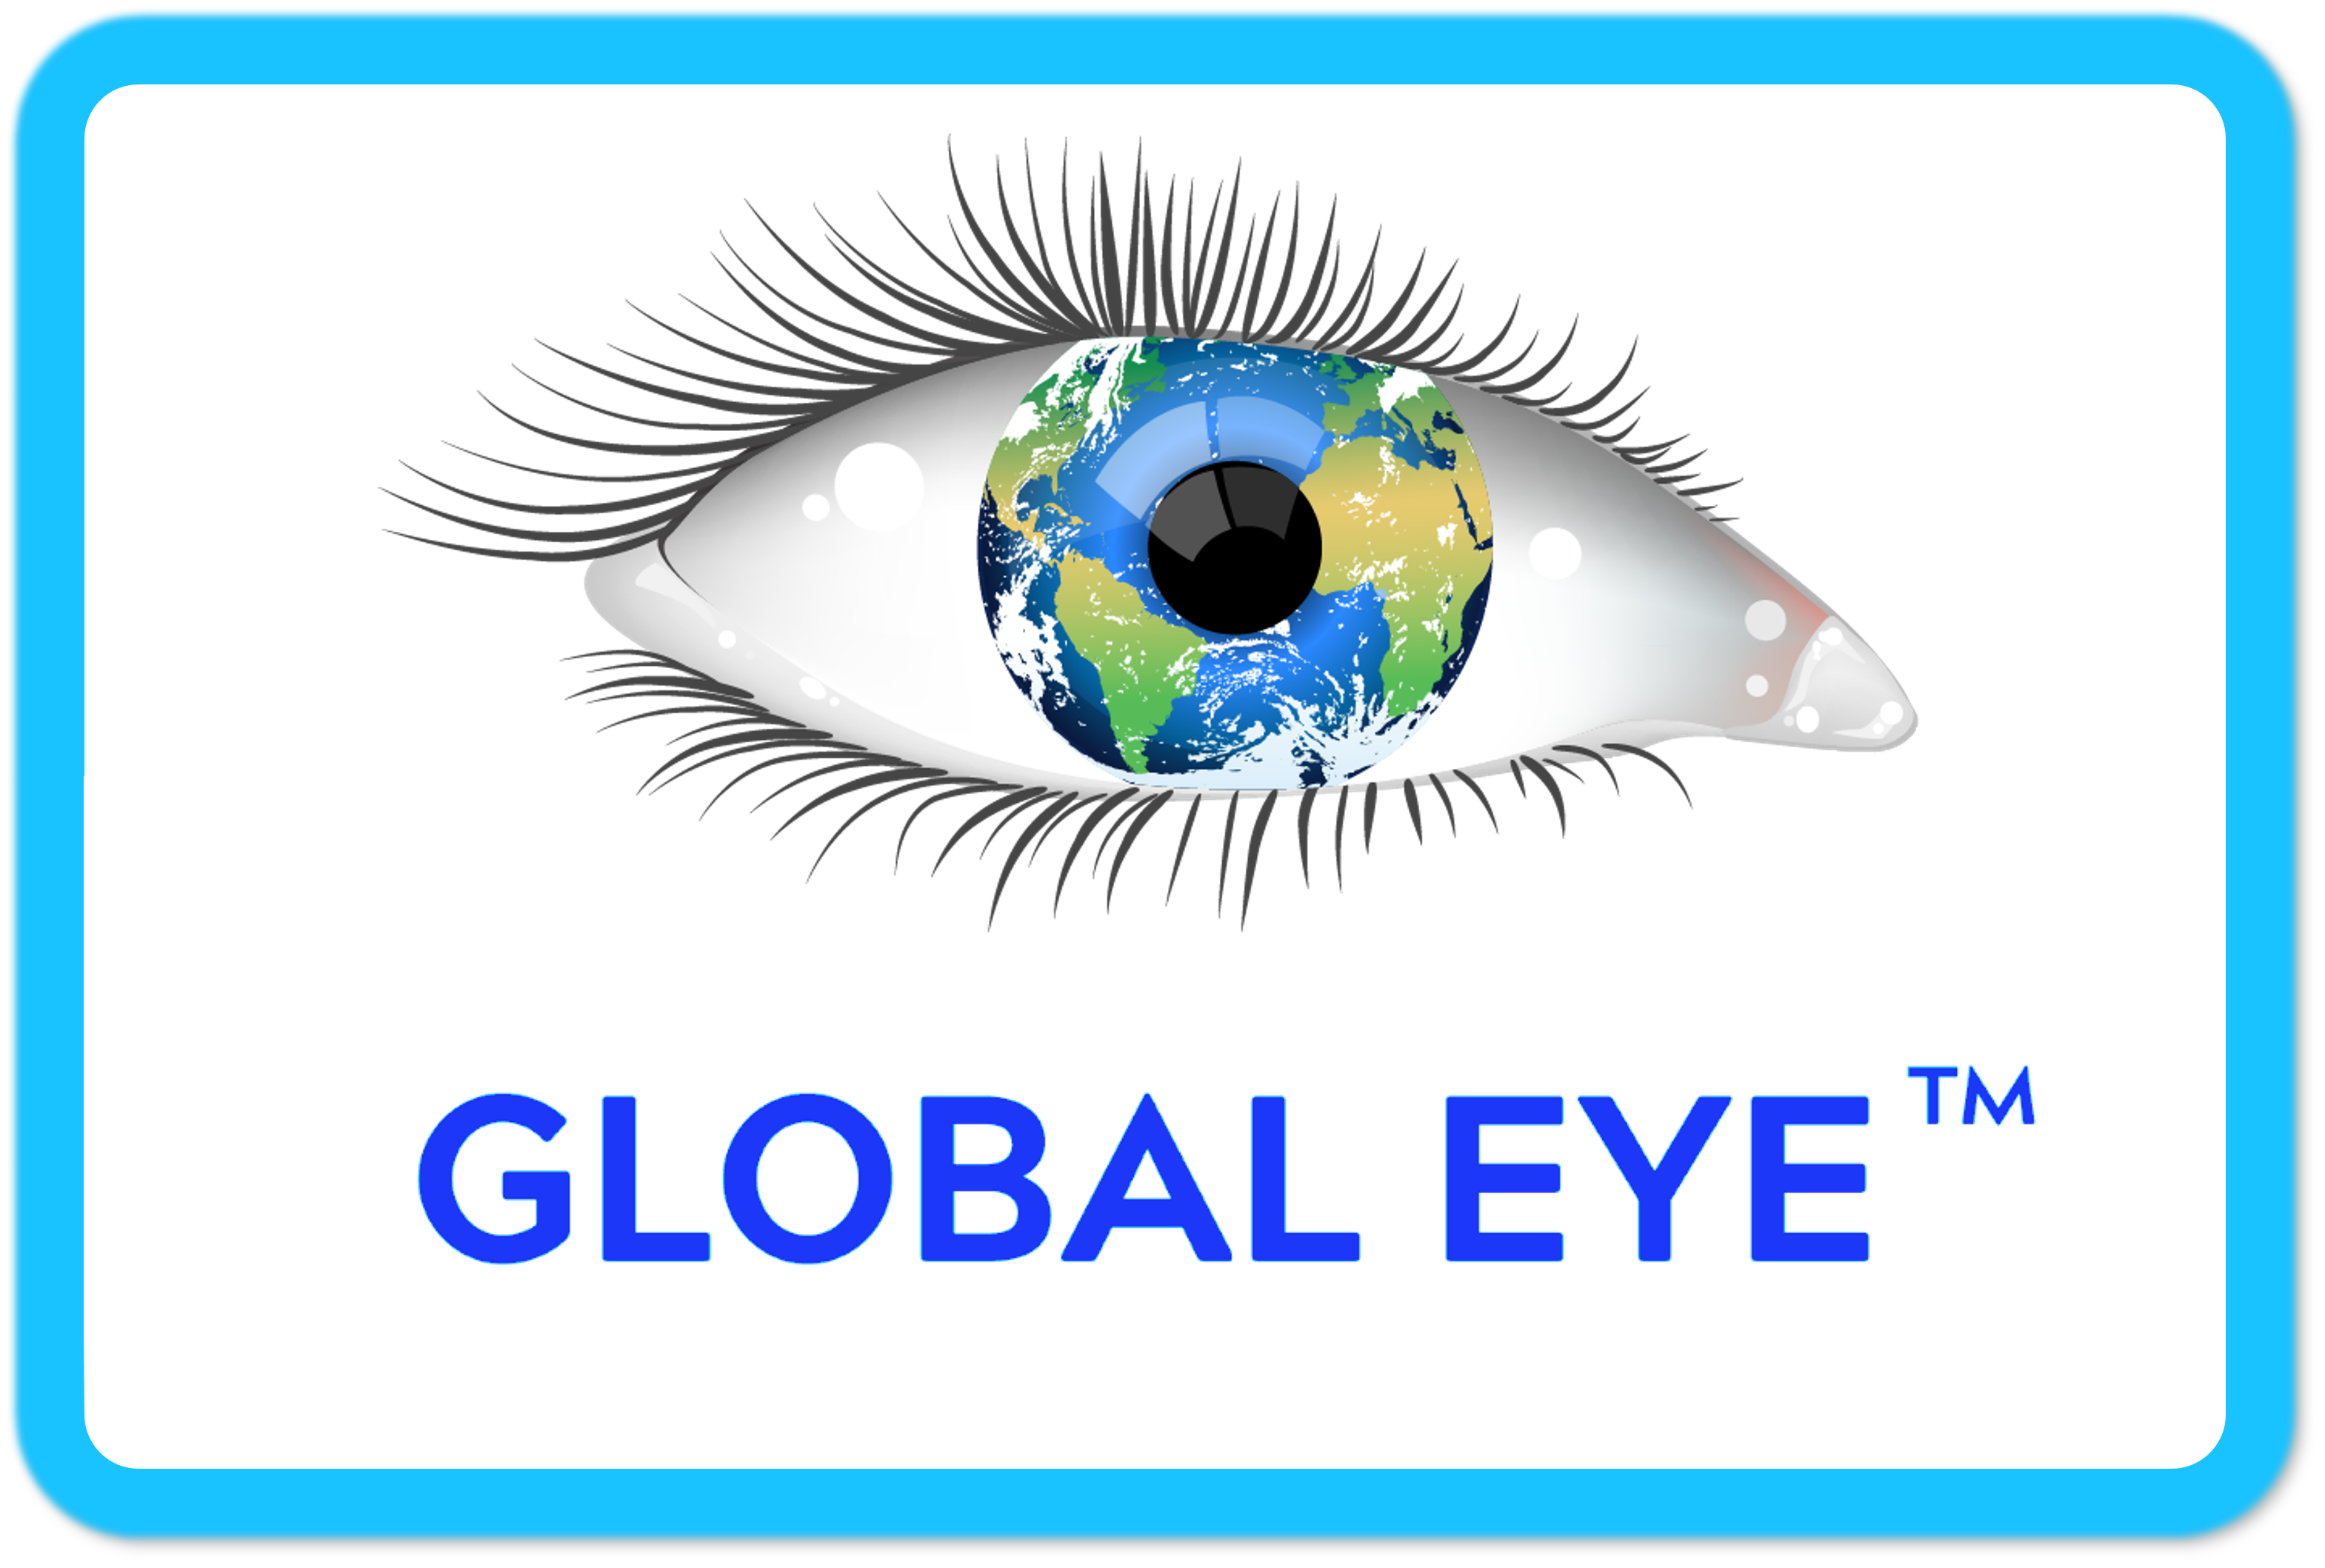 Global eye logo